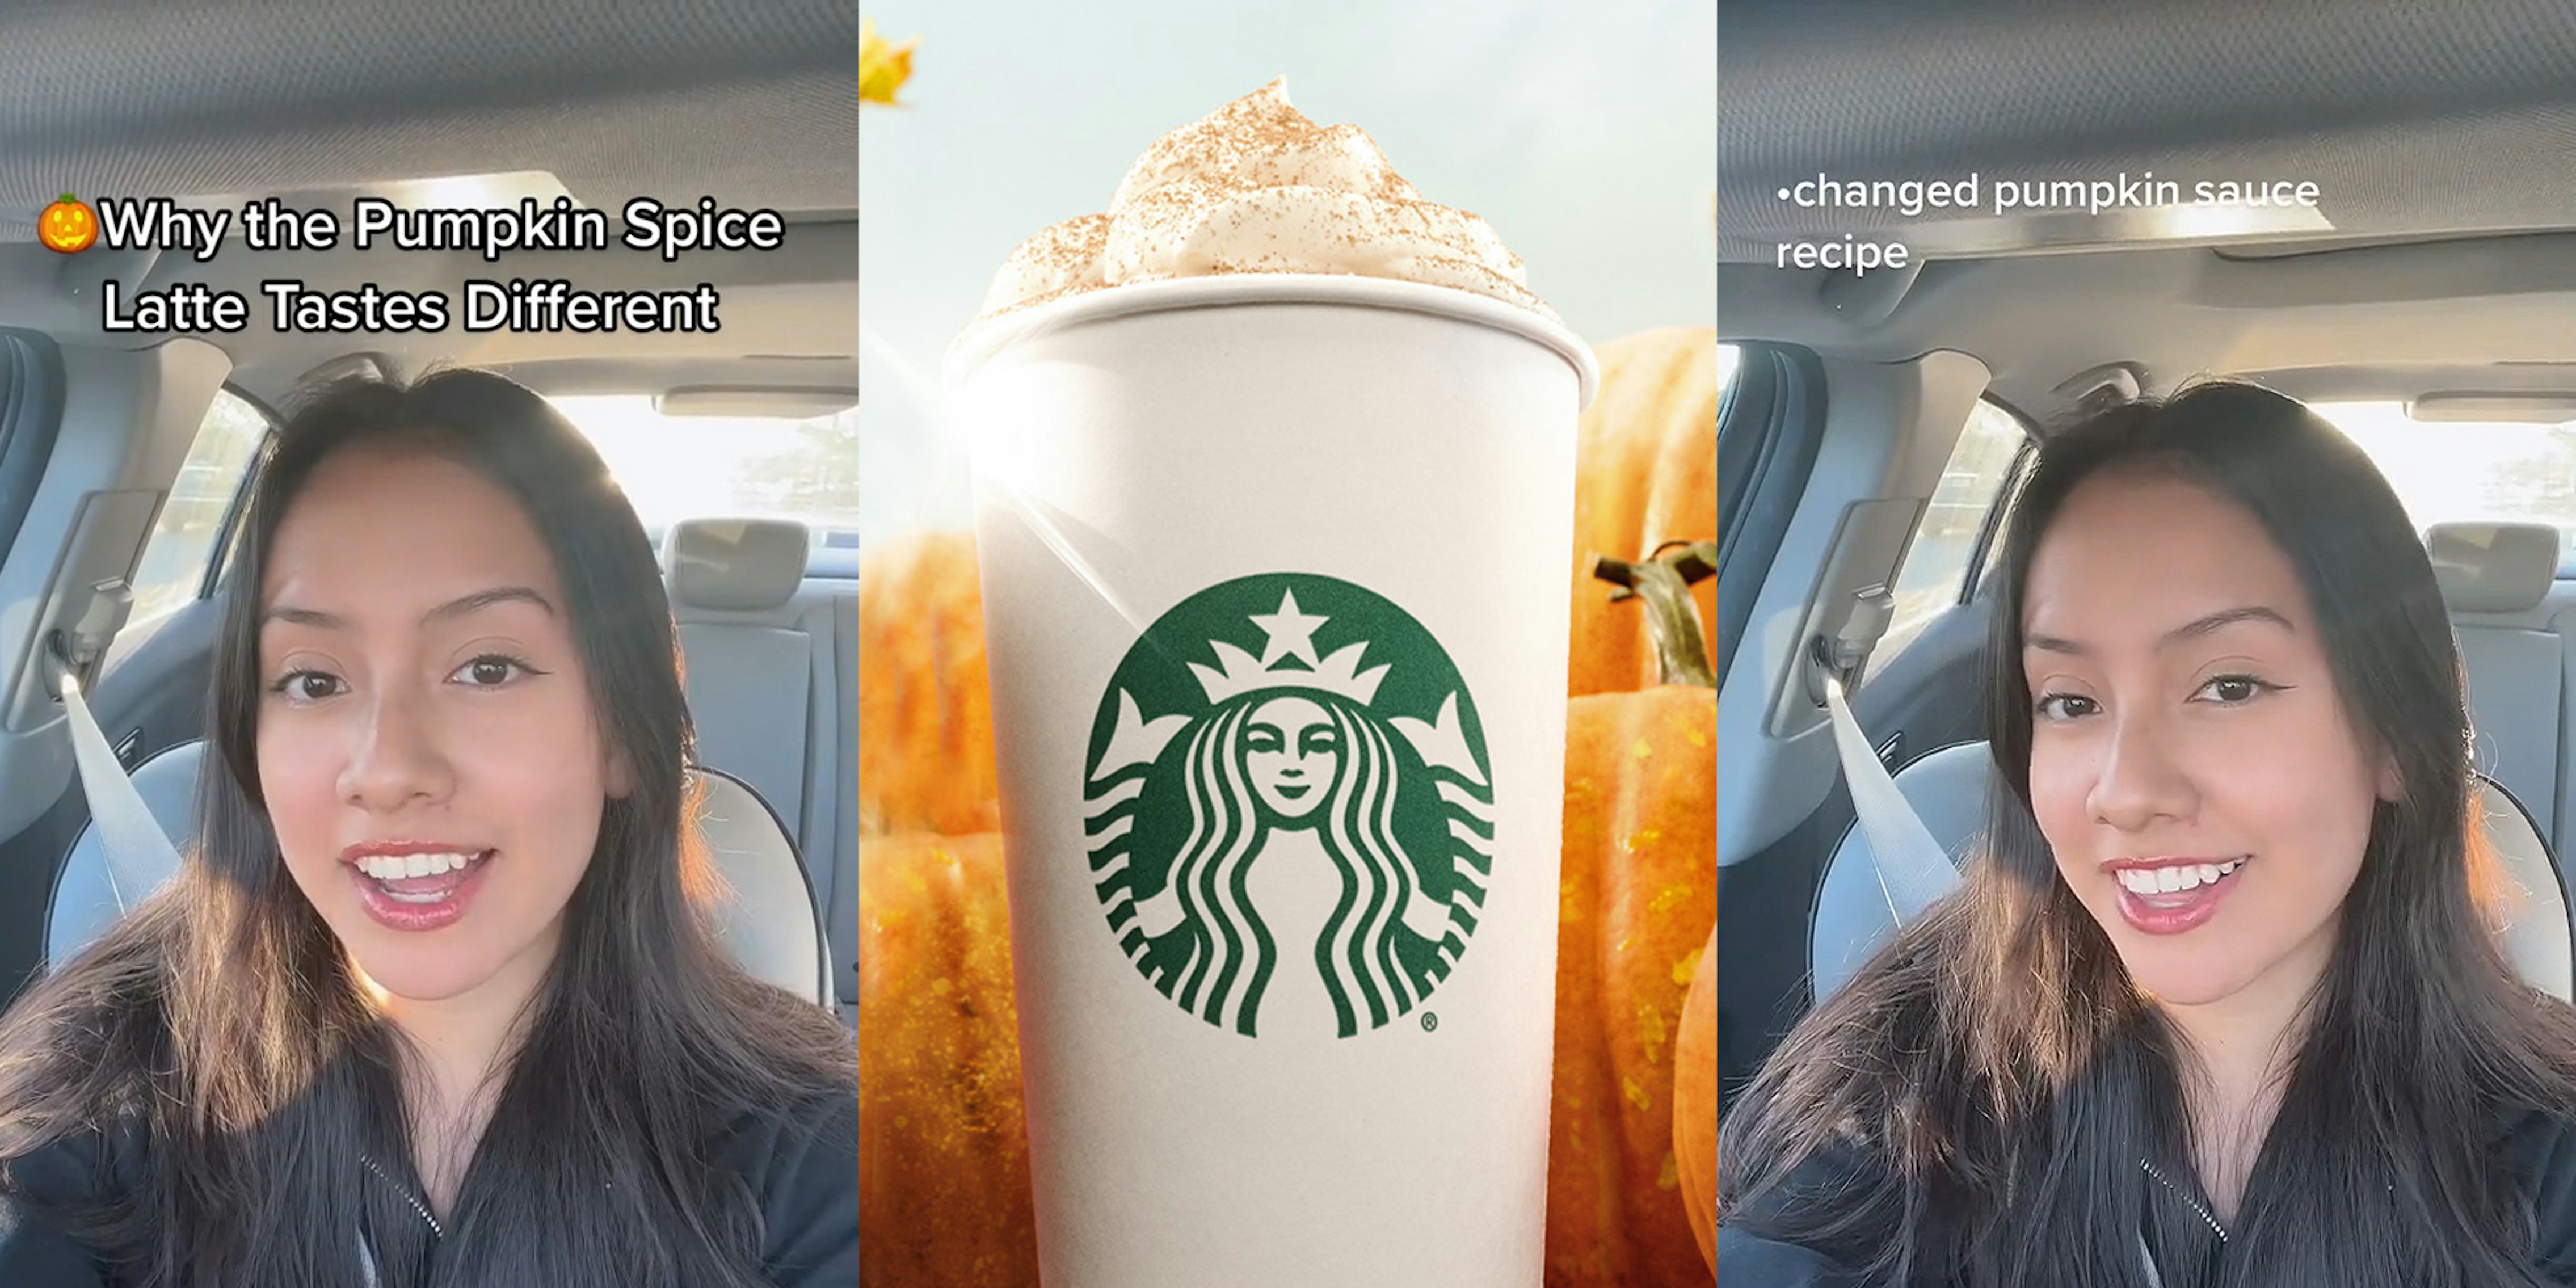 woman speaking in car caption 'Why the Pumpkin Spice Latte Tastes Different' (l) Starbucks Pumpkin Spice Latte with pumpkins behind (c) woman speaking in car caption 'changed pumpkin sauce recipe' (r)